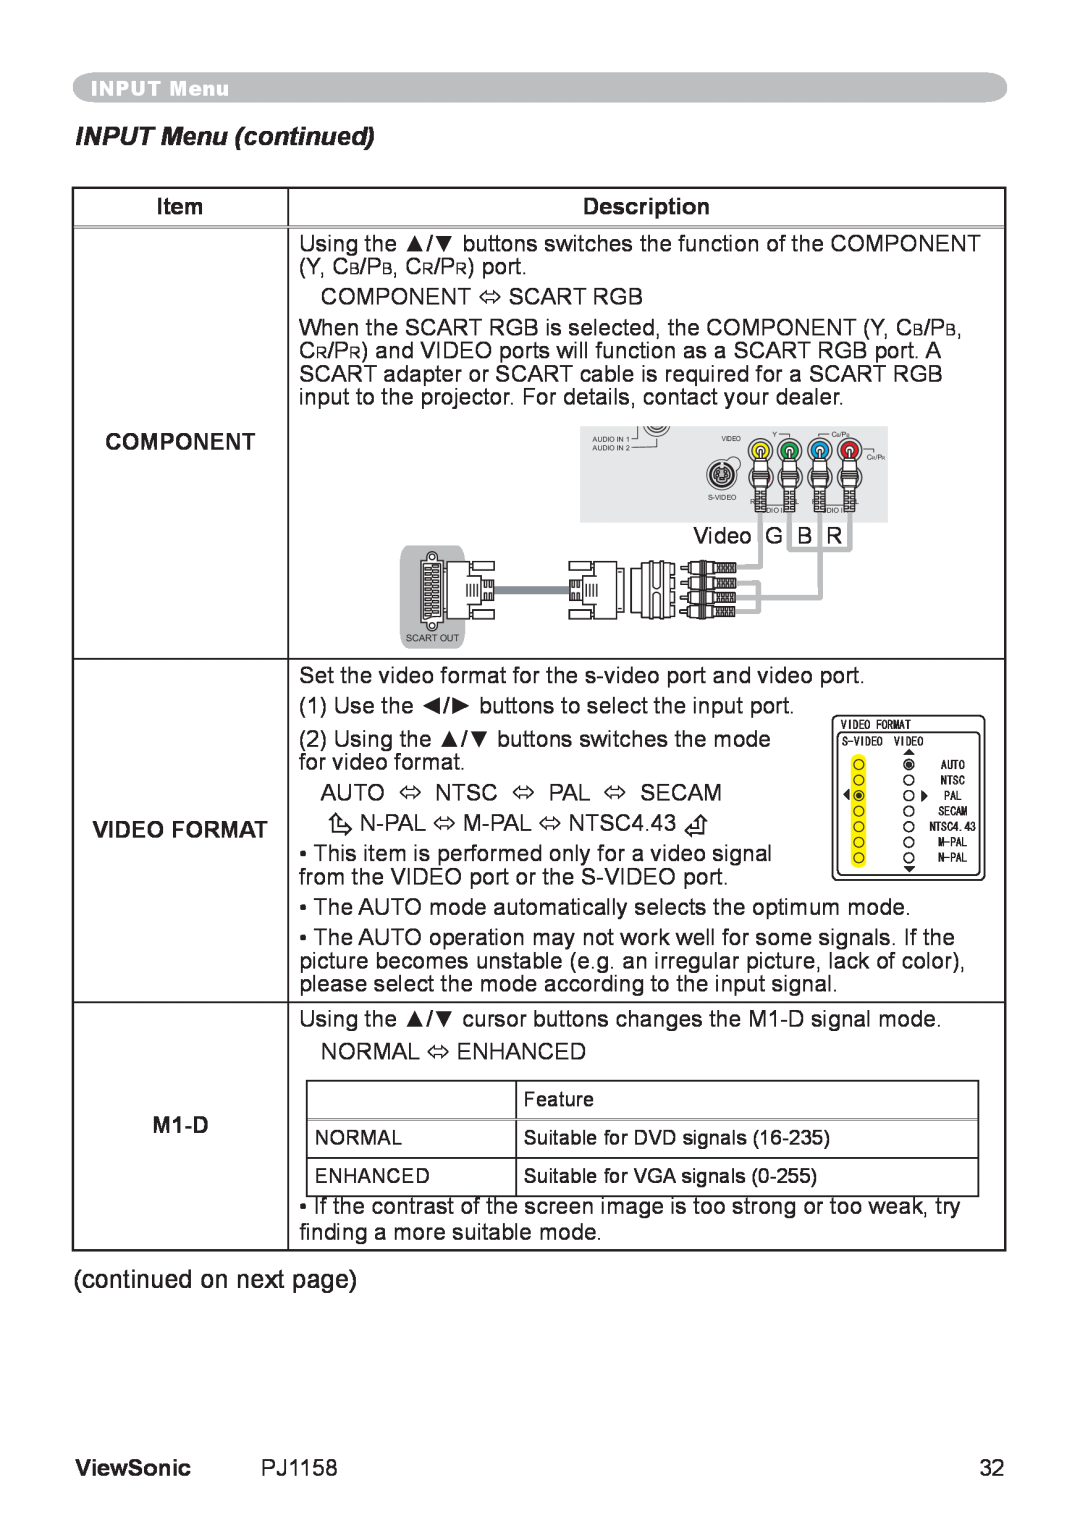 ViewSonic PJ1158 manual INPUT Menu continued, Item, Description, Component, Video Format, M1-D, ViewSonic 